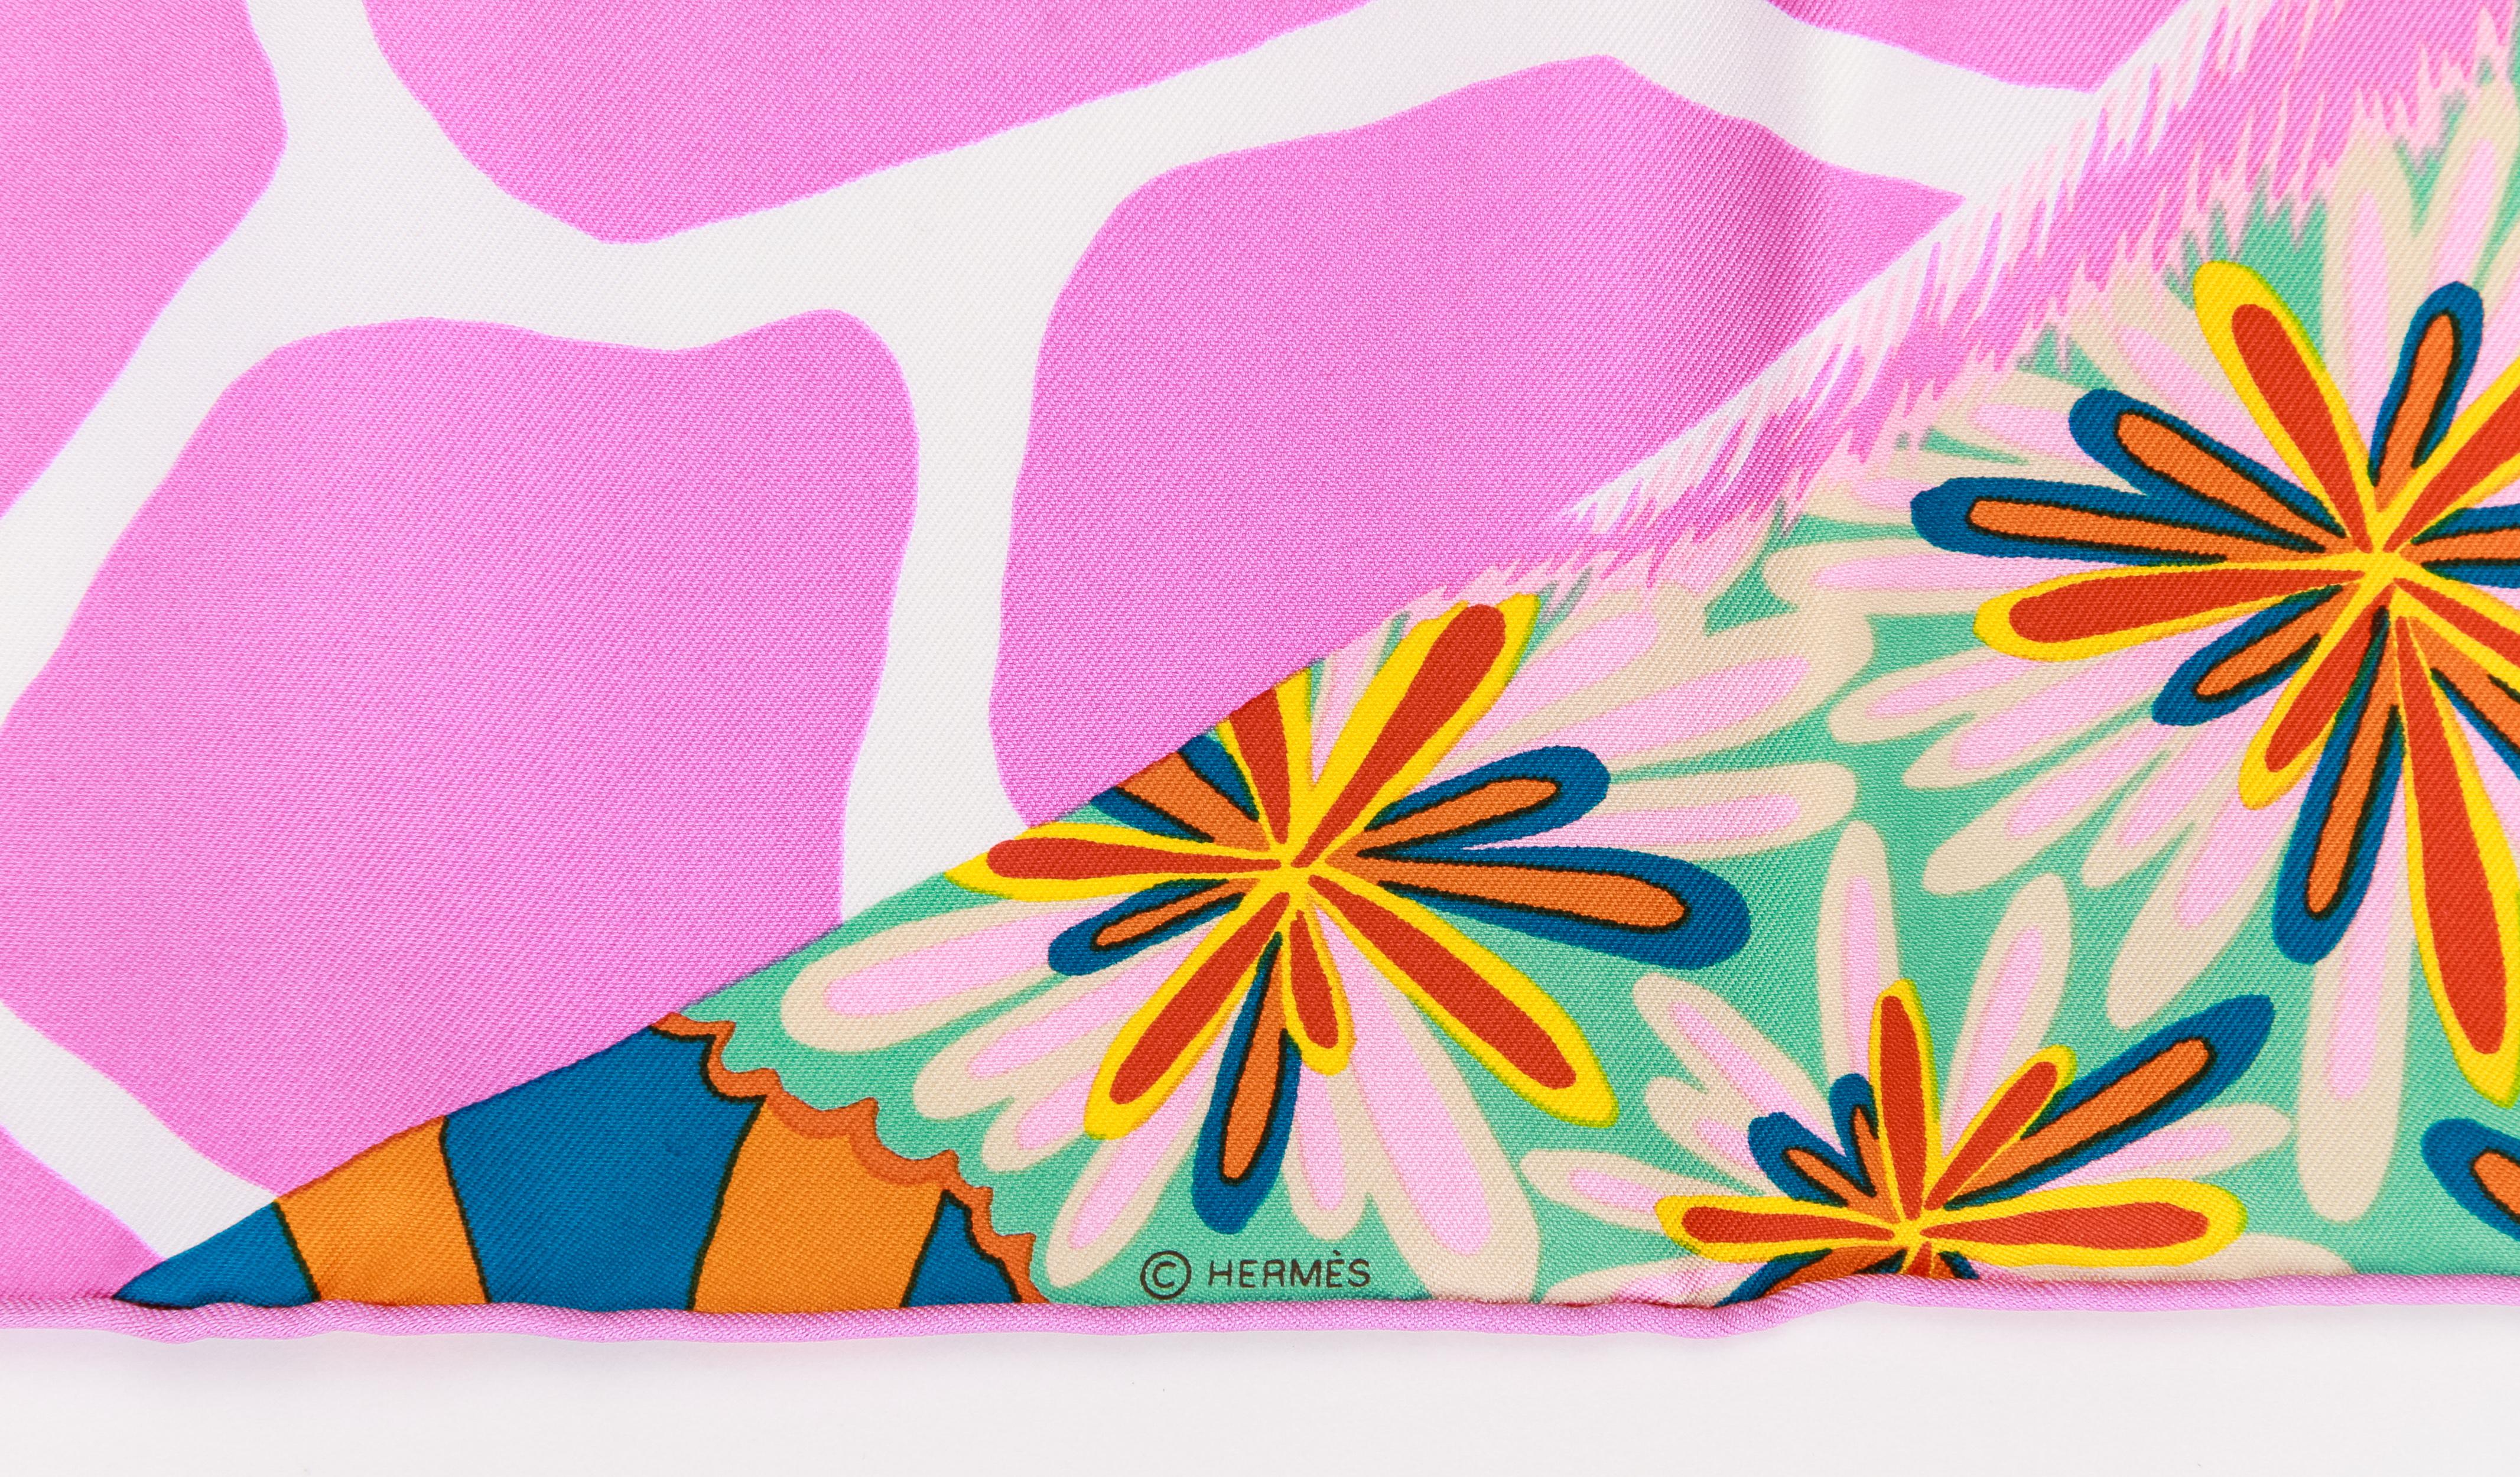 Hermès pink-and-blue giraffe silk gavroche scarf. Hand-rolled edges. New in box.
16